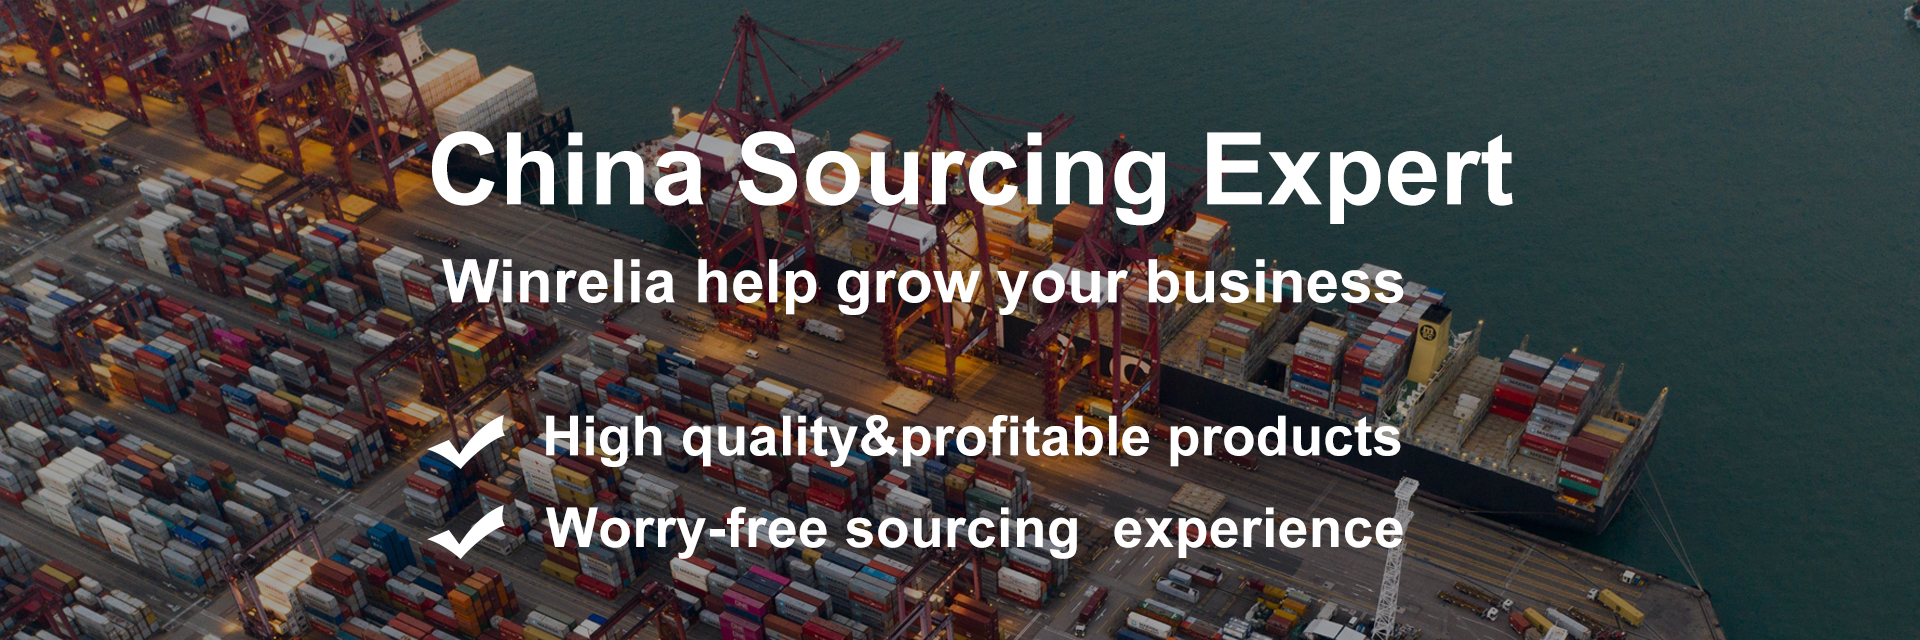 Winrelia China sourcing expert